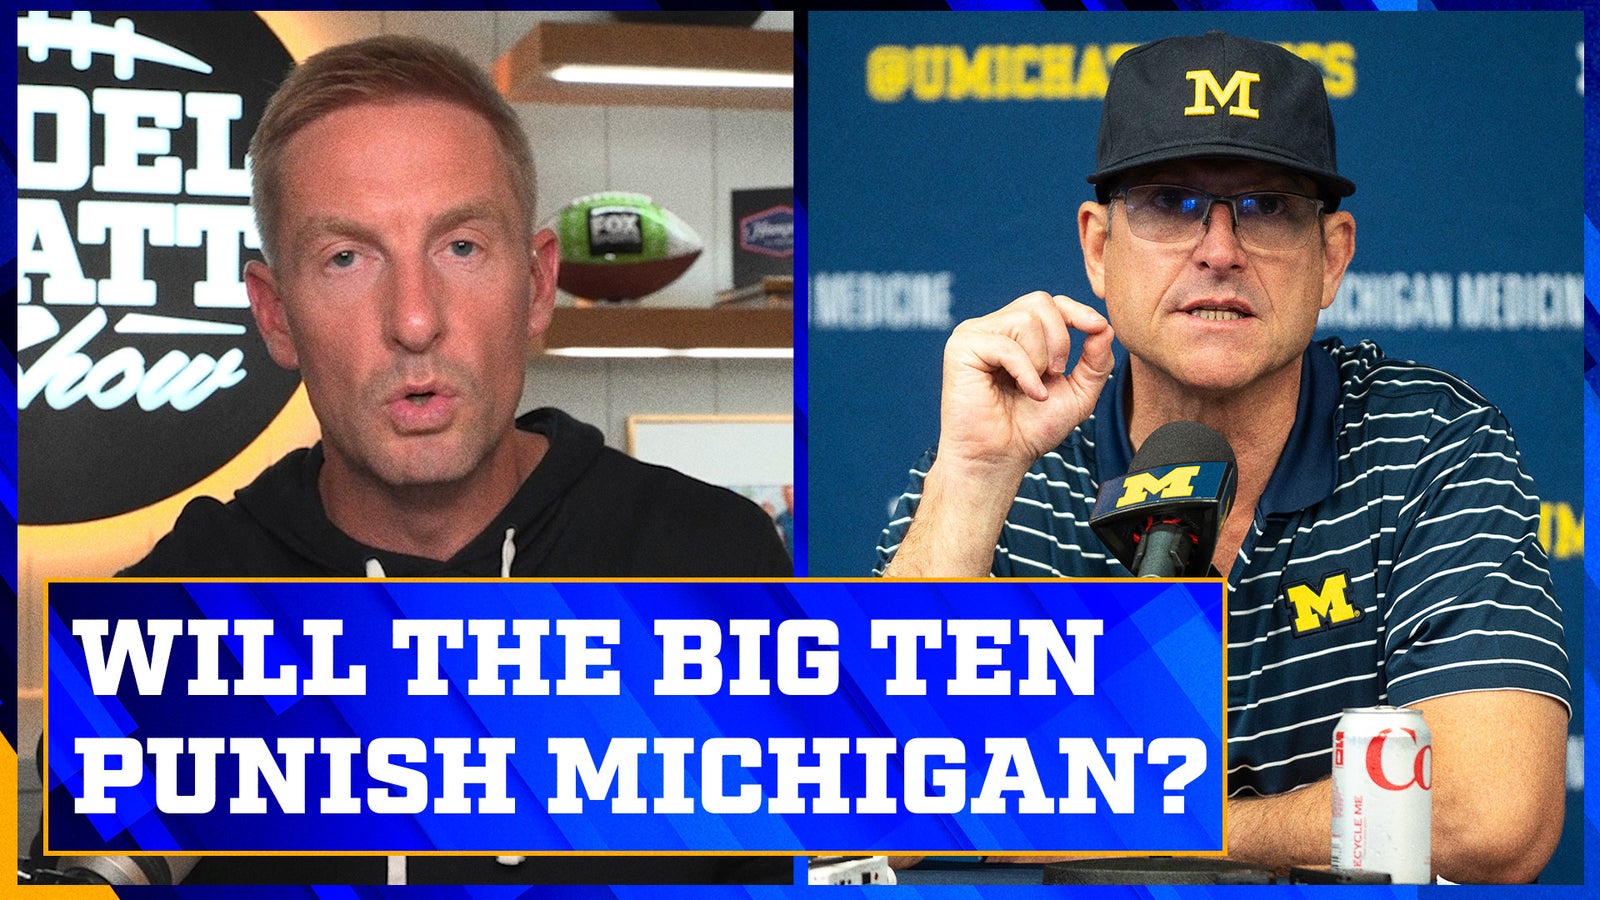 Will the Big Ten punish Michigan?